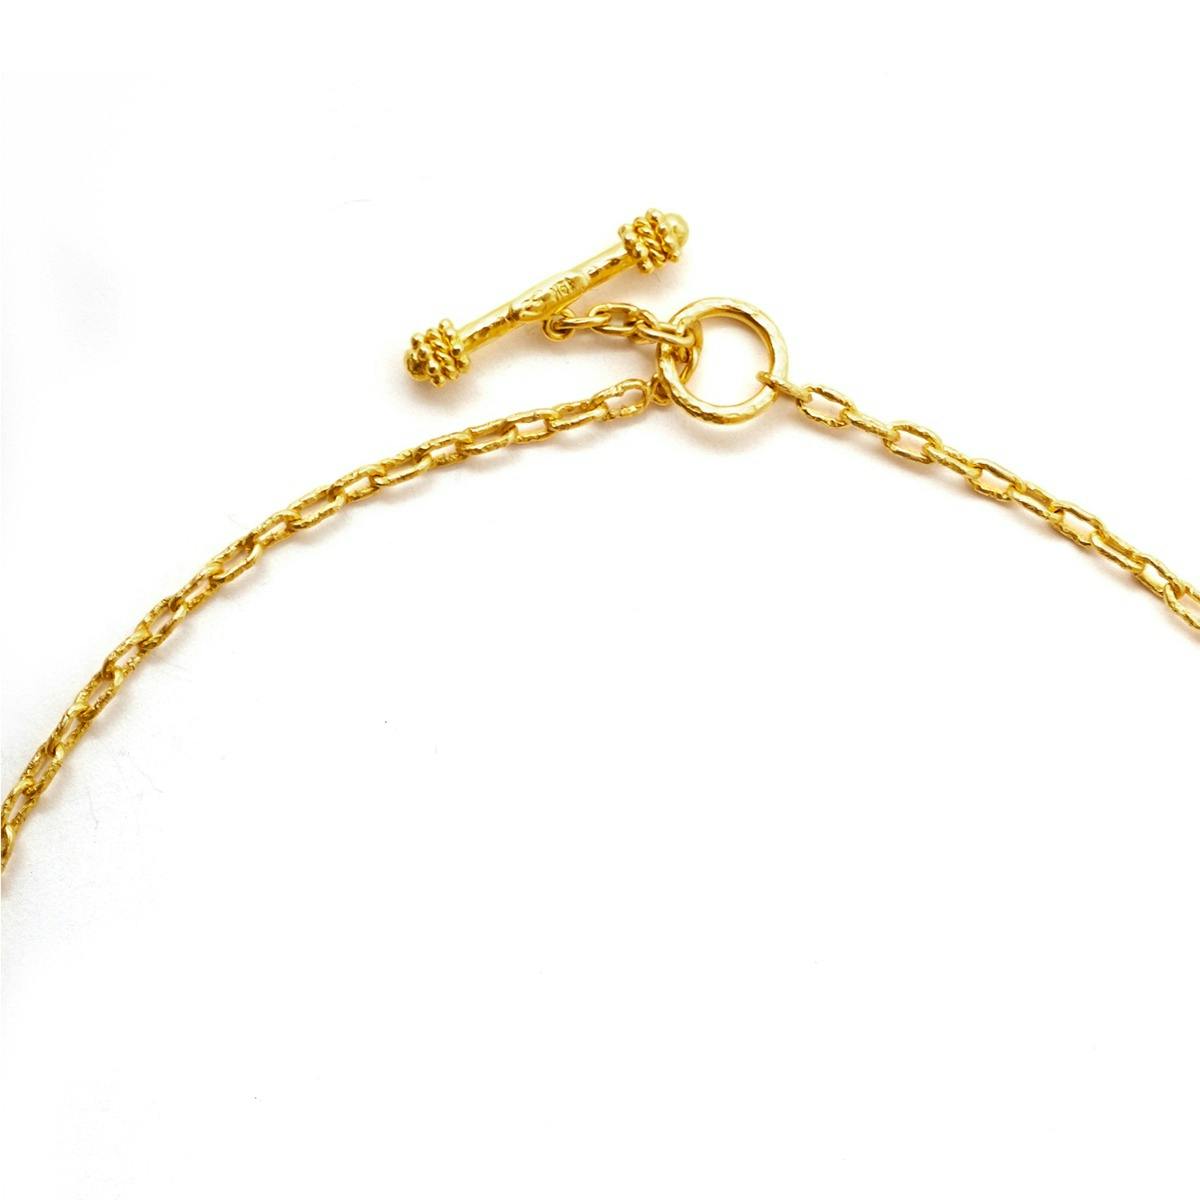 Elizabeth Locke Very Fine Gold Chain Necklace - 17"  1